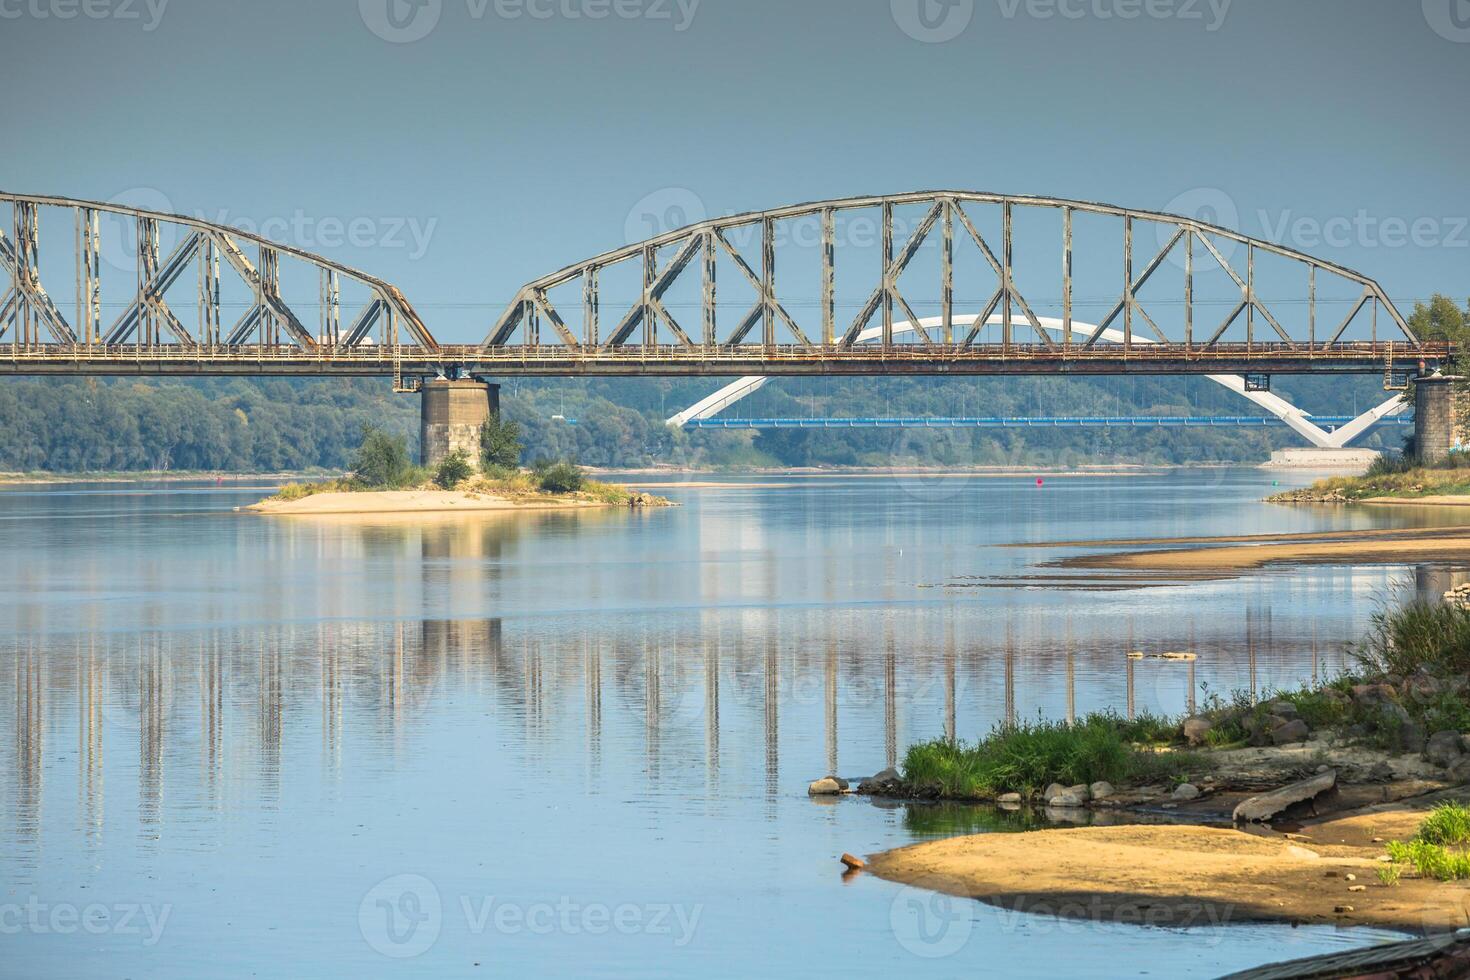 Polen - rennen beroemd truss brug over- vistula rivier. vervoer infrastructuur. foto